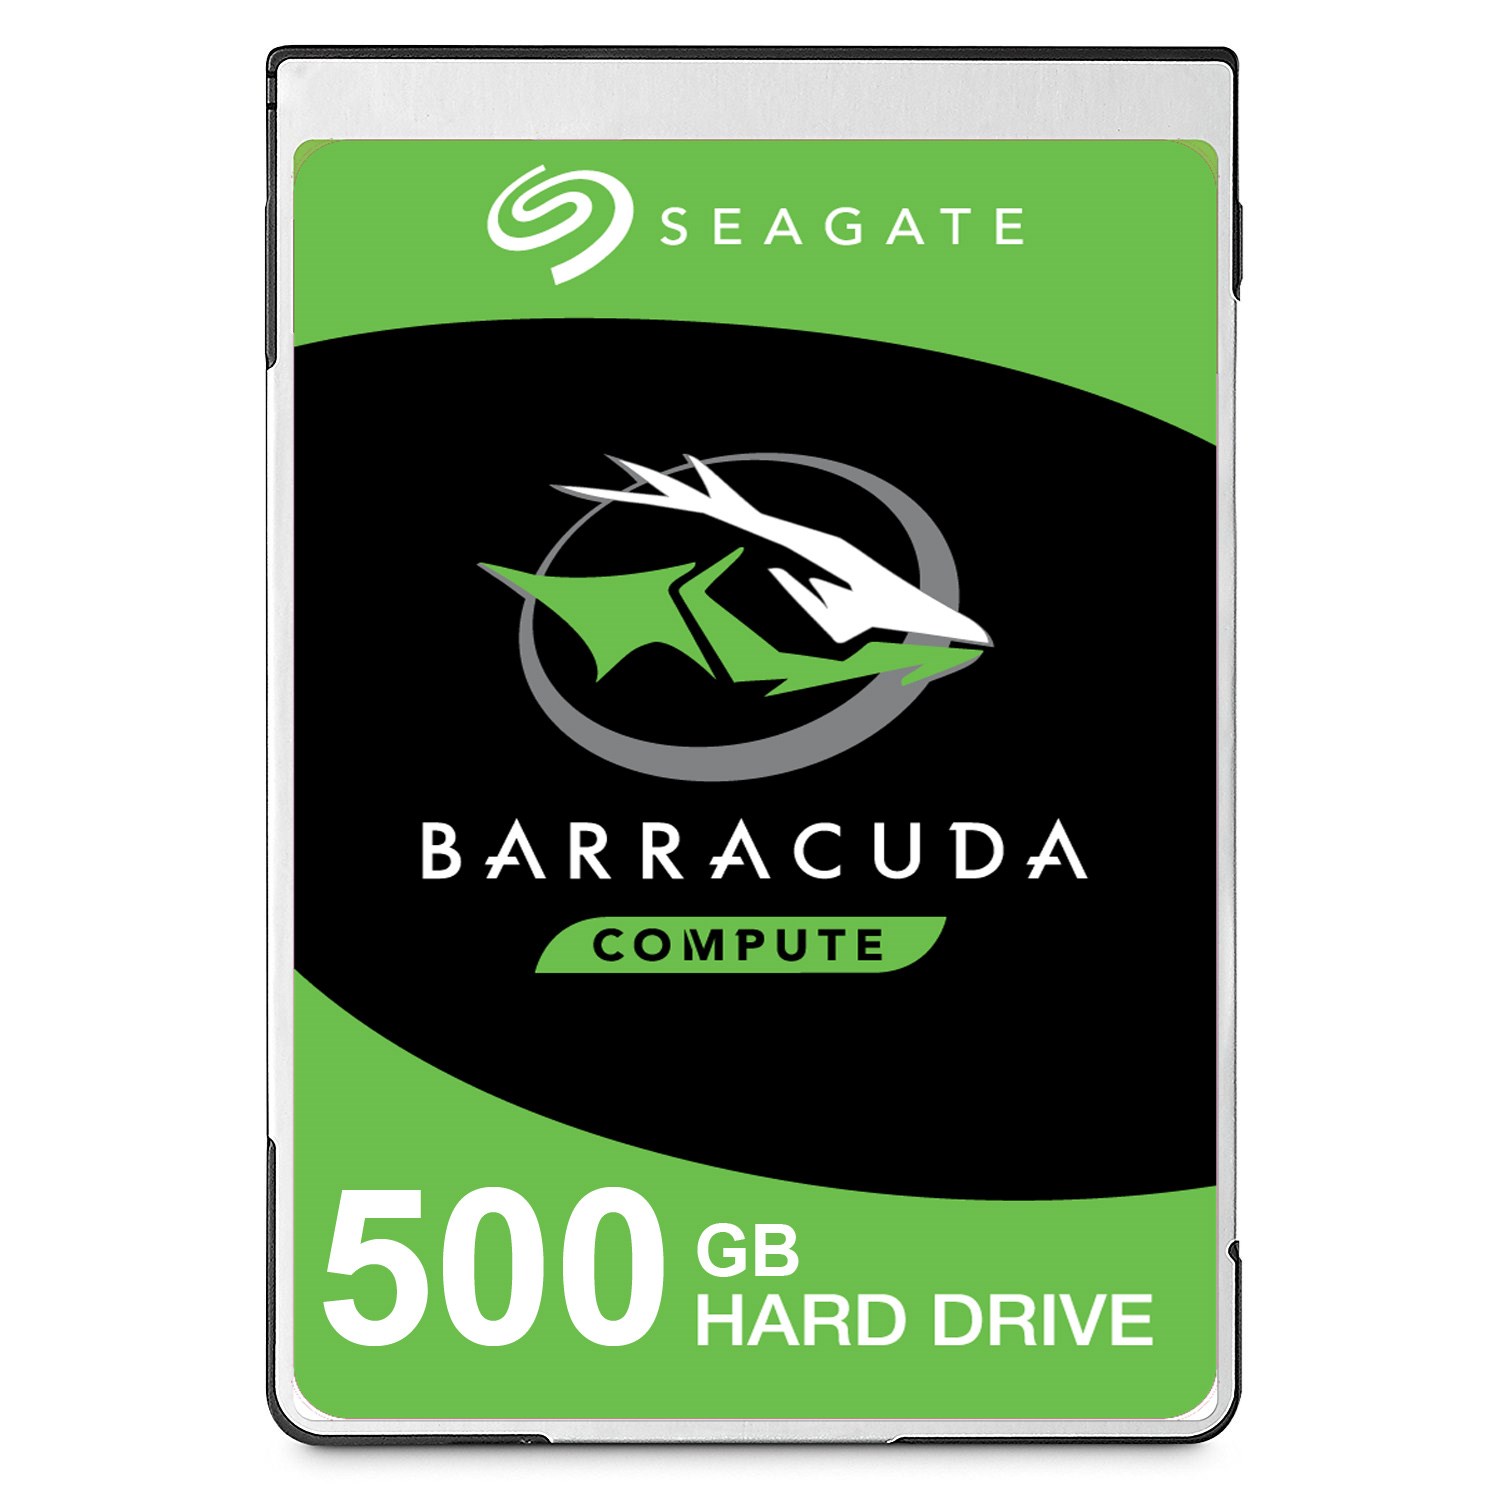 SEAGATE BARRACUDA 500GB 5400 RPM 128MB SATA3 6Gbit/sn ST500LM030 NOTEBOOK HDD